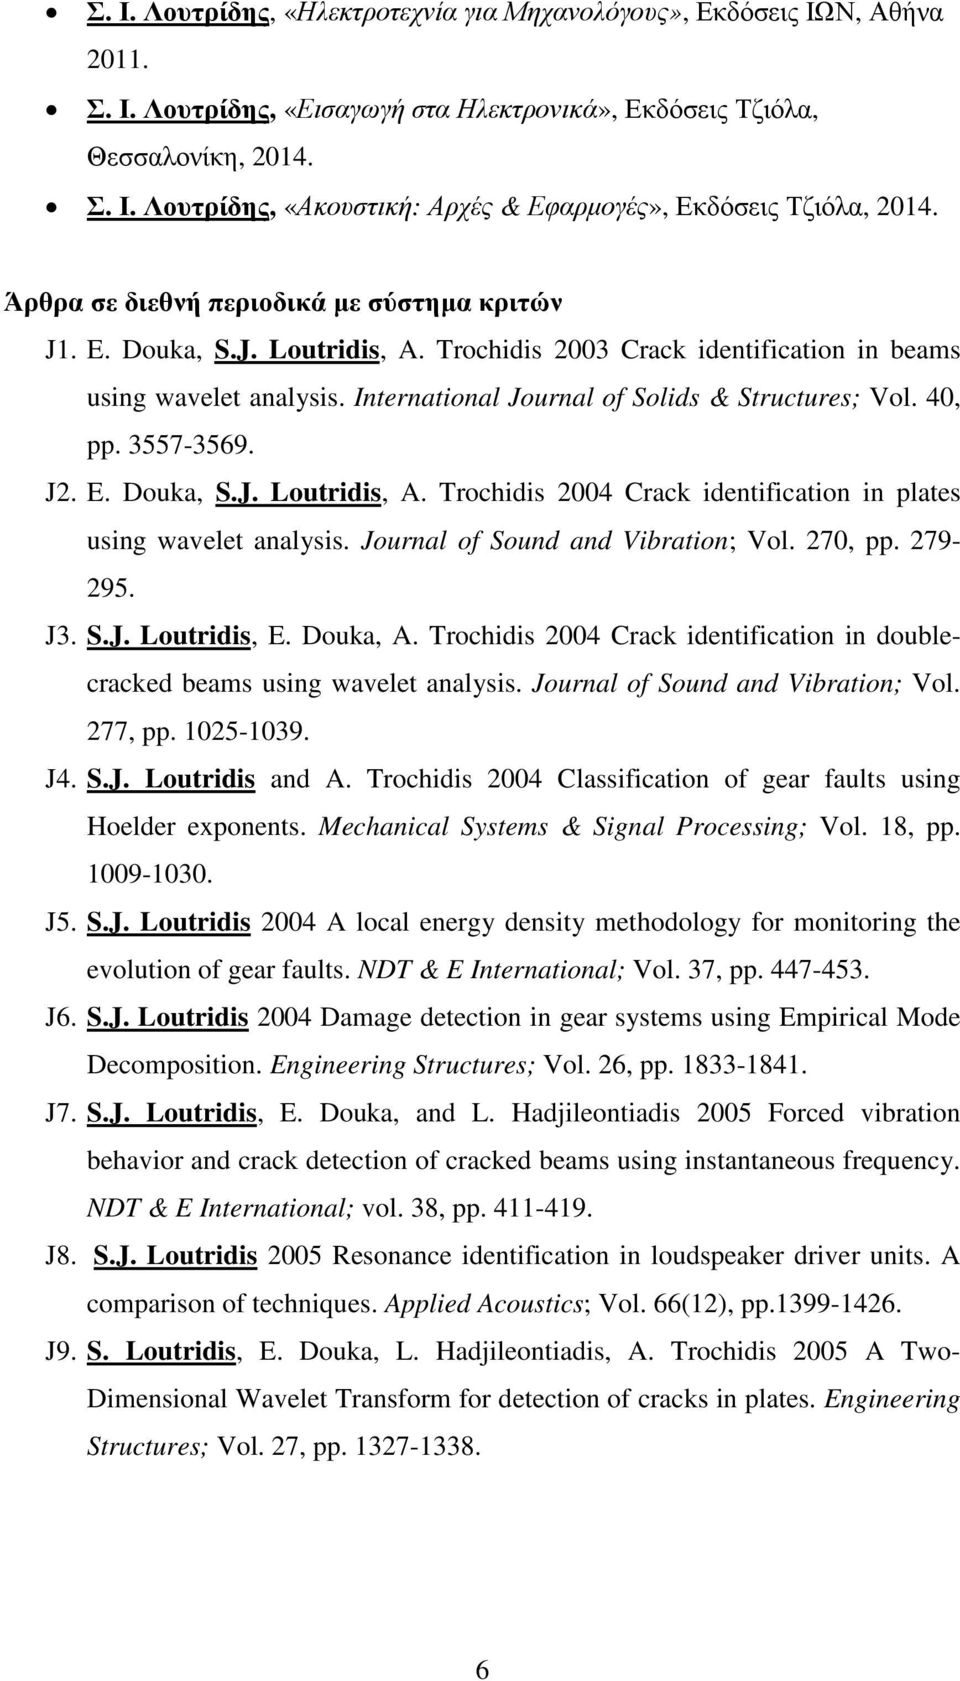 40, pp. 3557-3569. J2. E. Douka, S.J. Loutridis, A. Trochidis 2004 Crack identification in plates using wavelet analysis. Journal of Sound and Vibration; Vol. 270, pp. 279-295. J3. S.J. Loutridis, E.